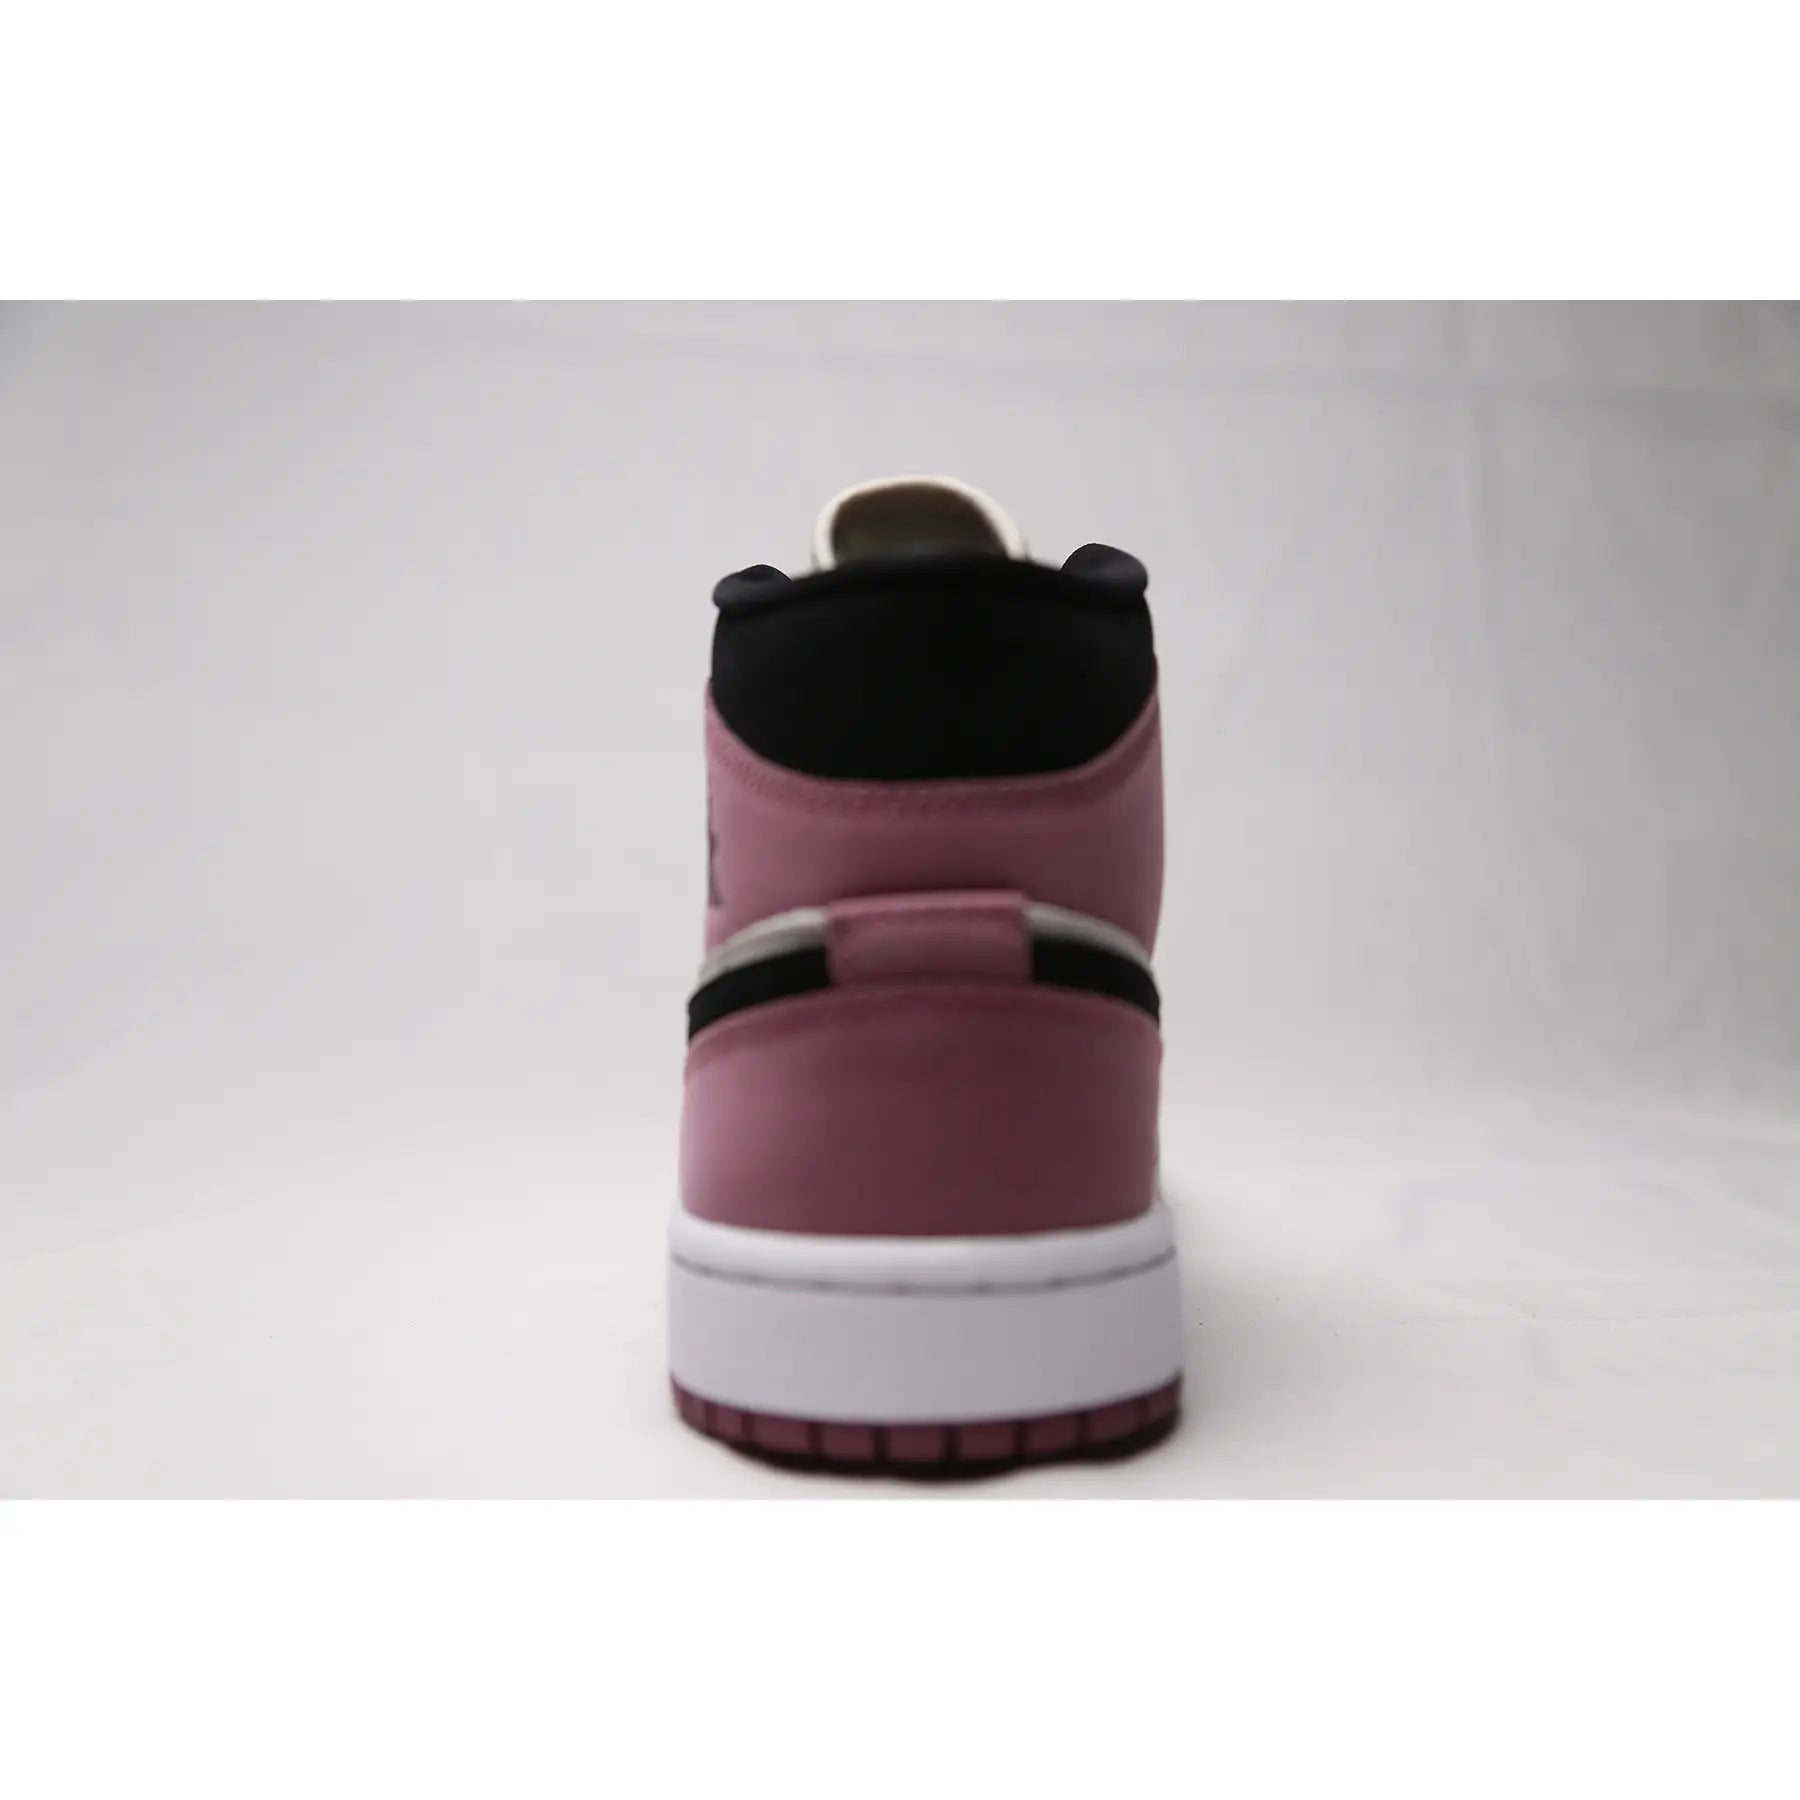 Air Jordan 1 Mid Mulberry Berry Pink